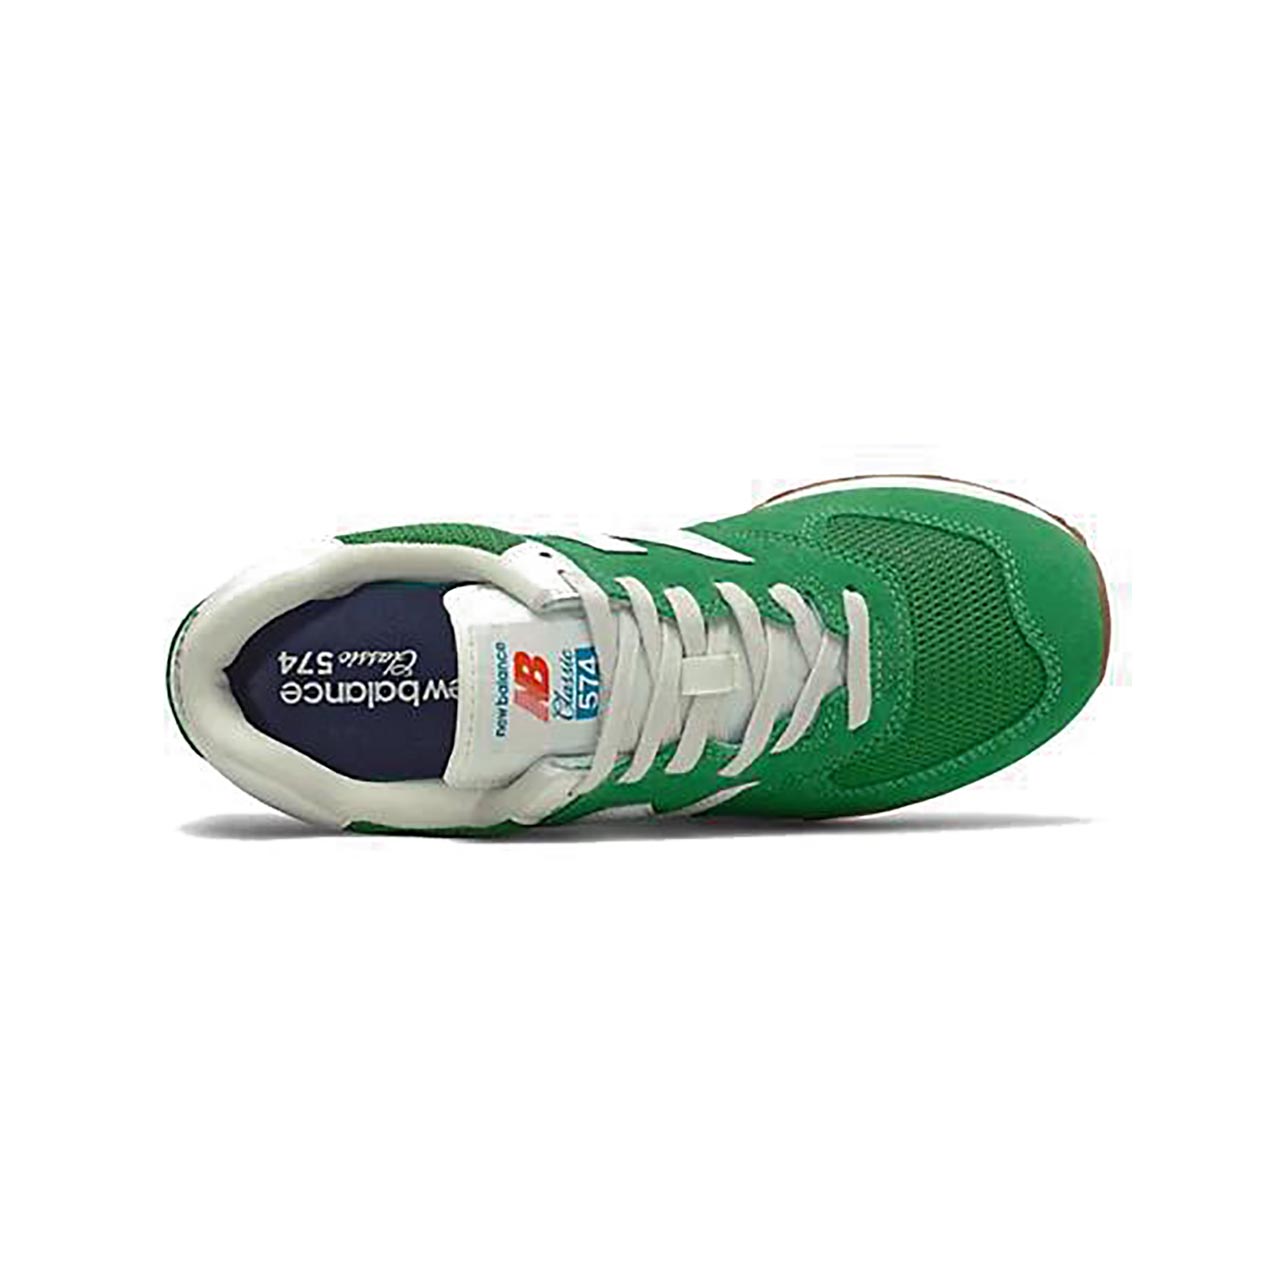 sport service italia sneakers new balance ml574he2 04 - Sport Service Italia